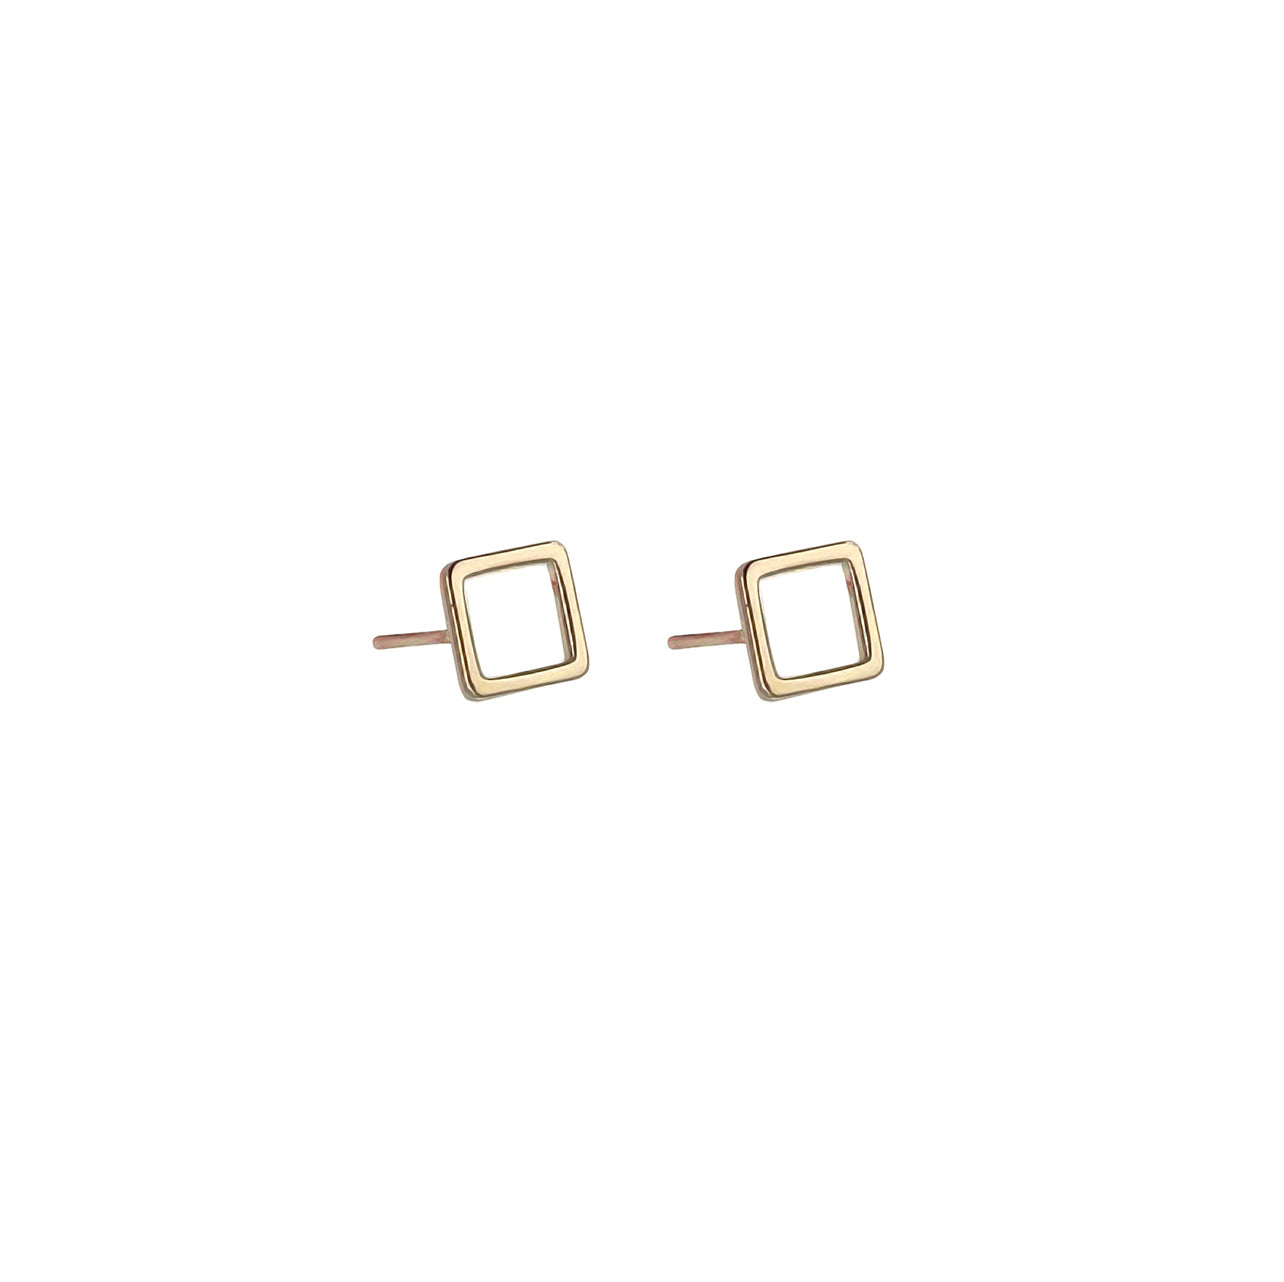 Gold square stud earrings